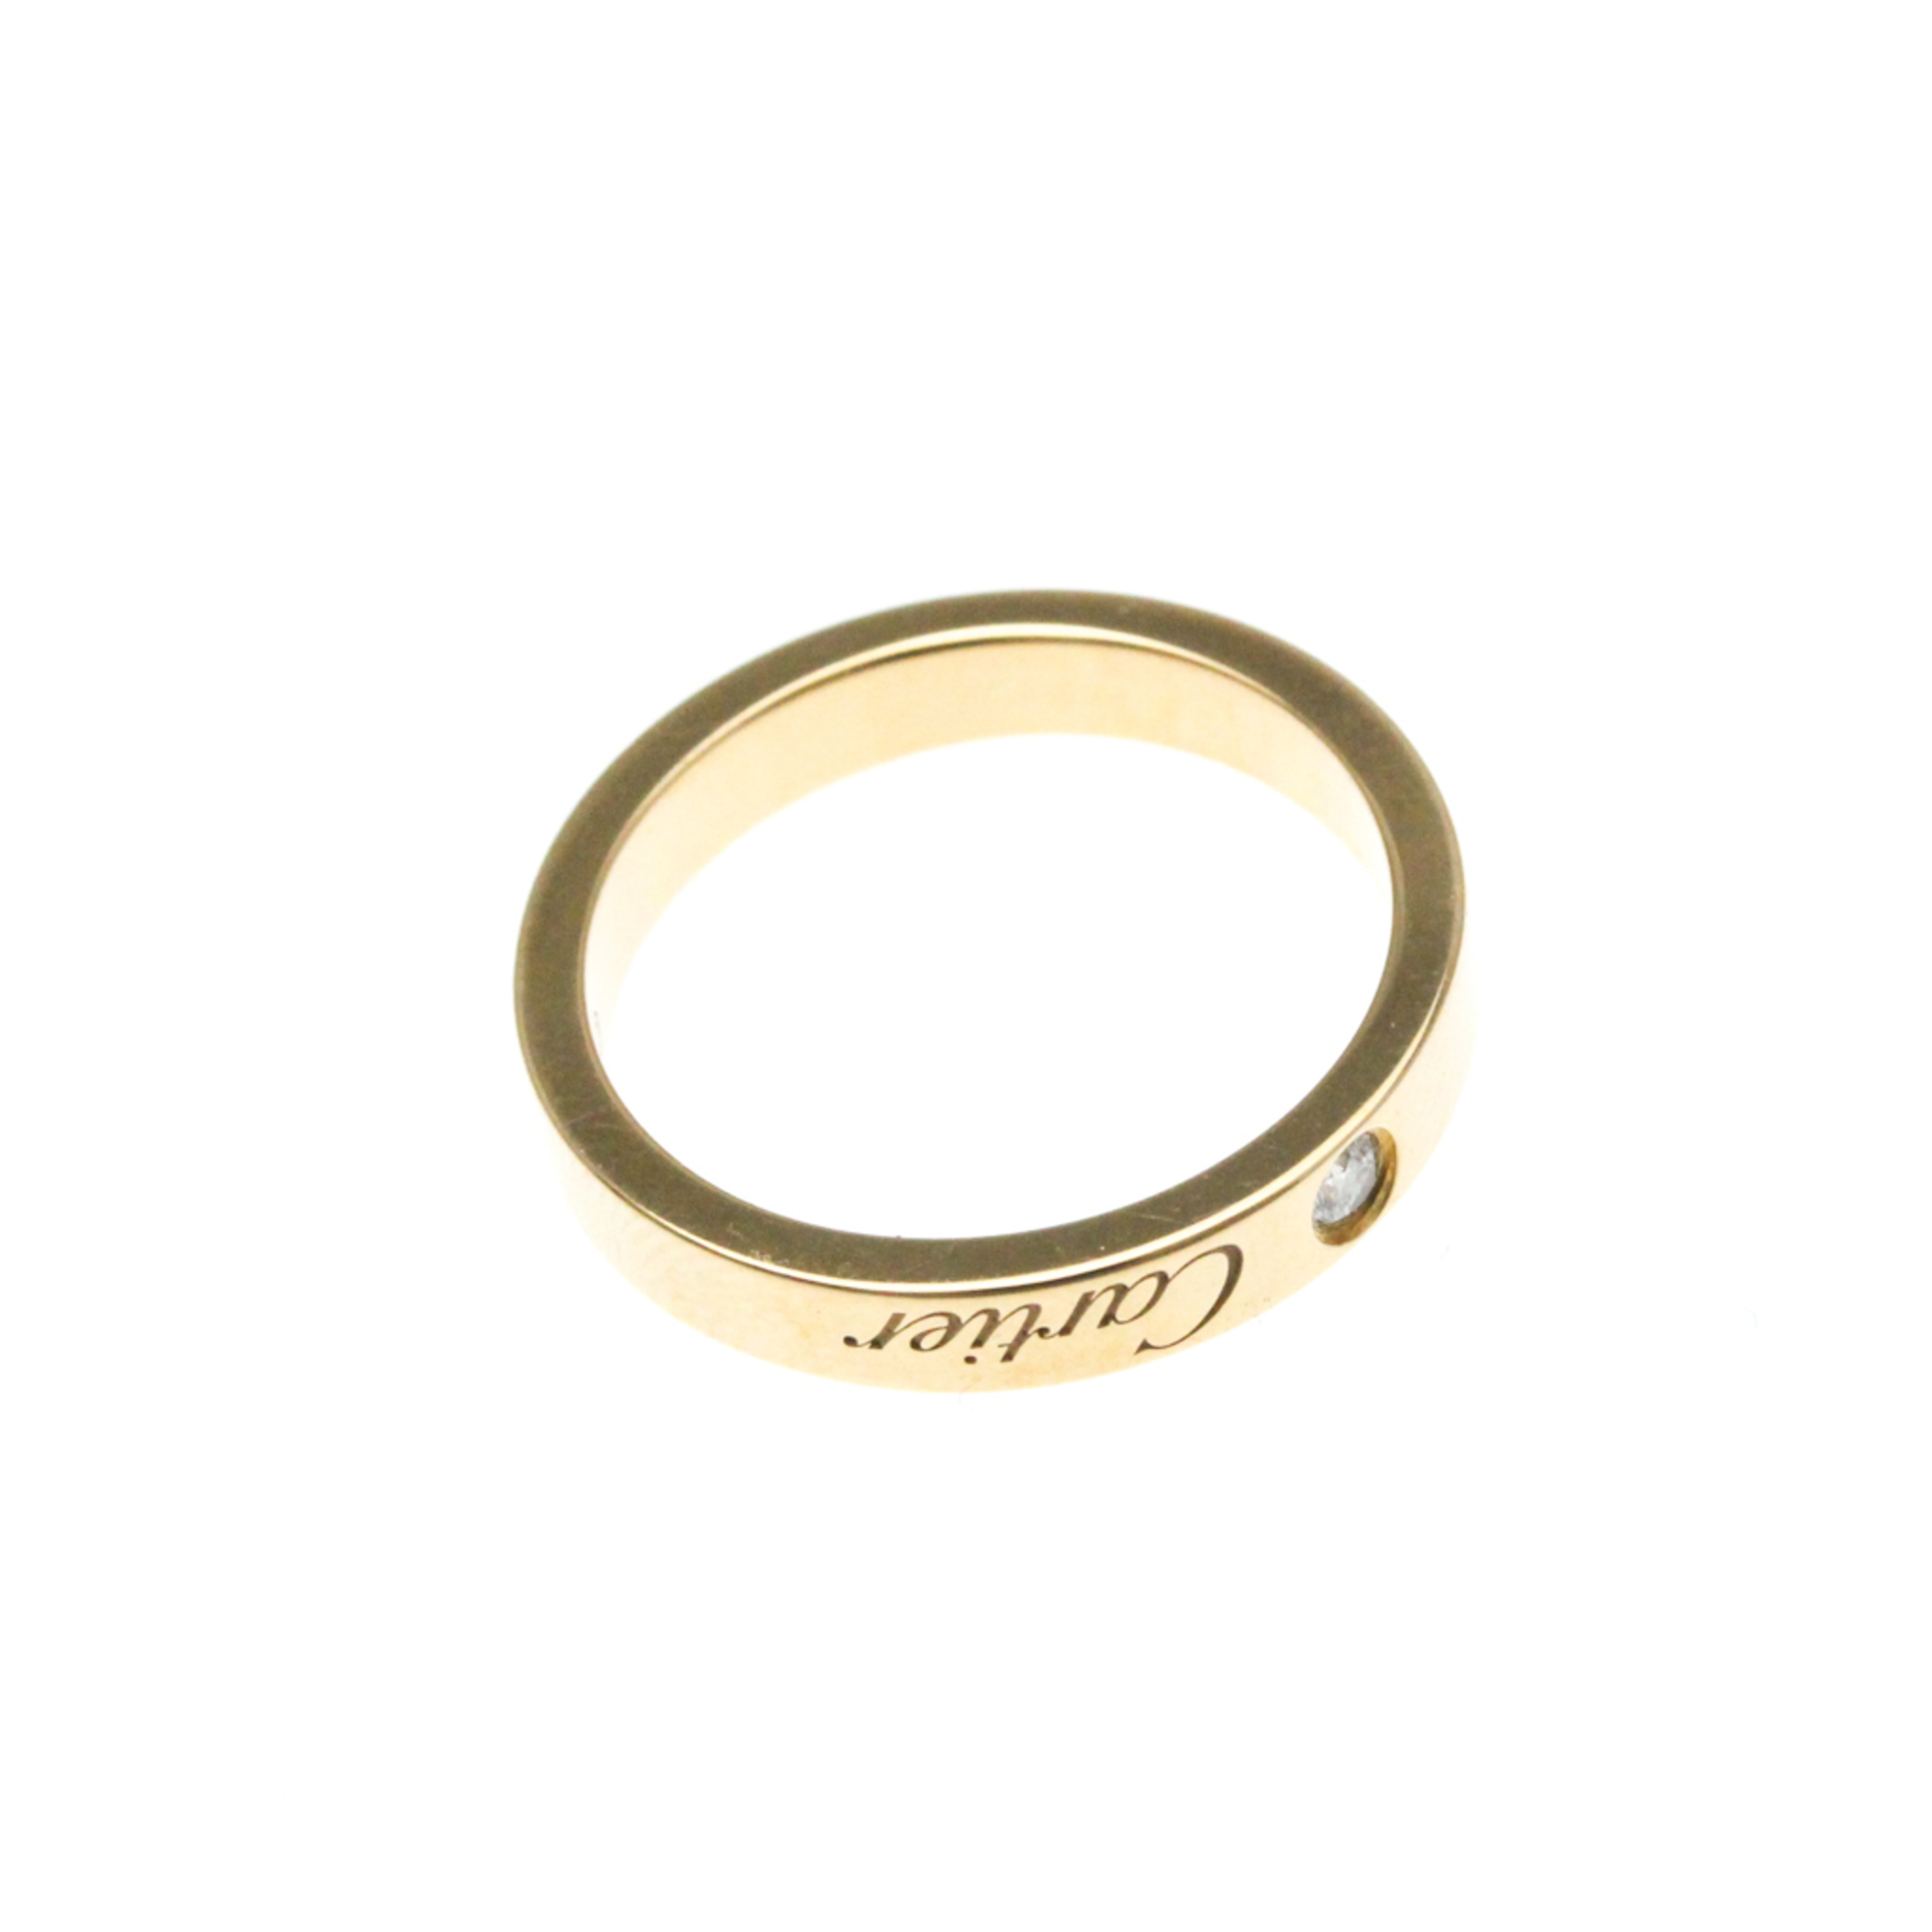 Cartier Engraved Ring Pink Gold (18K) Fashion Diamond Band Ring Pink Gold